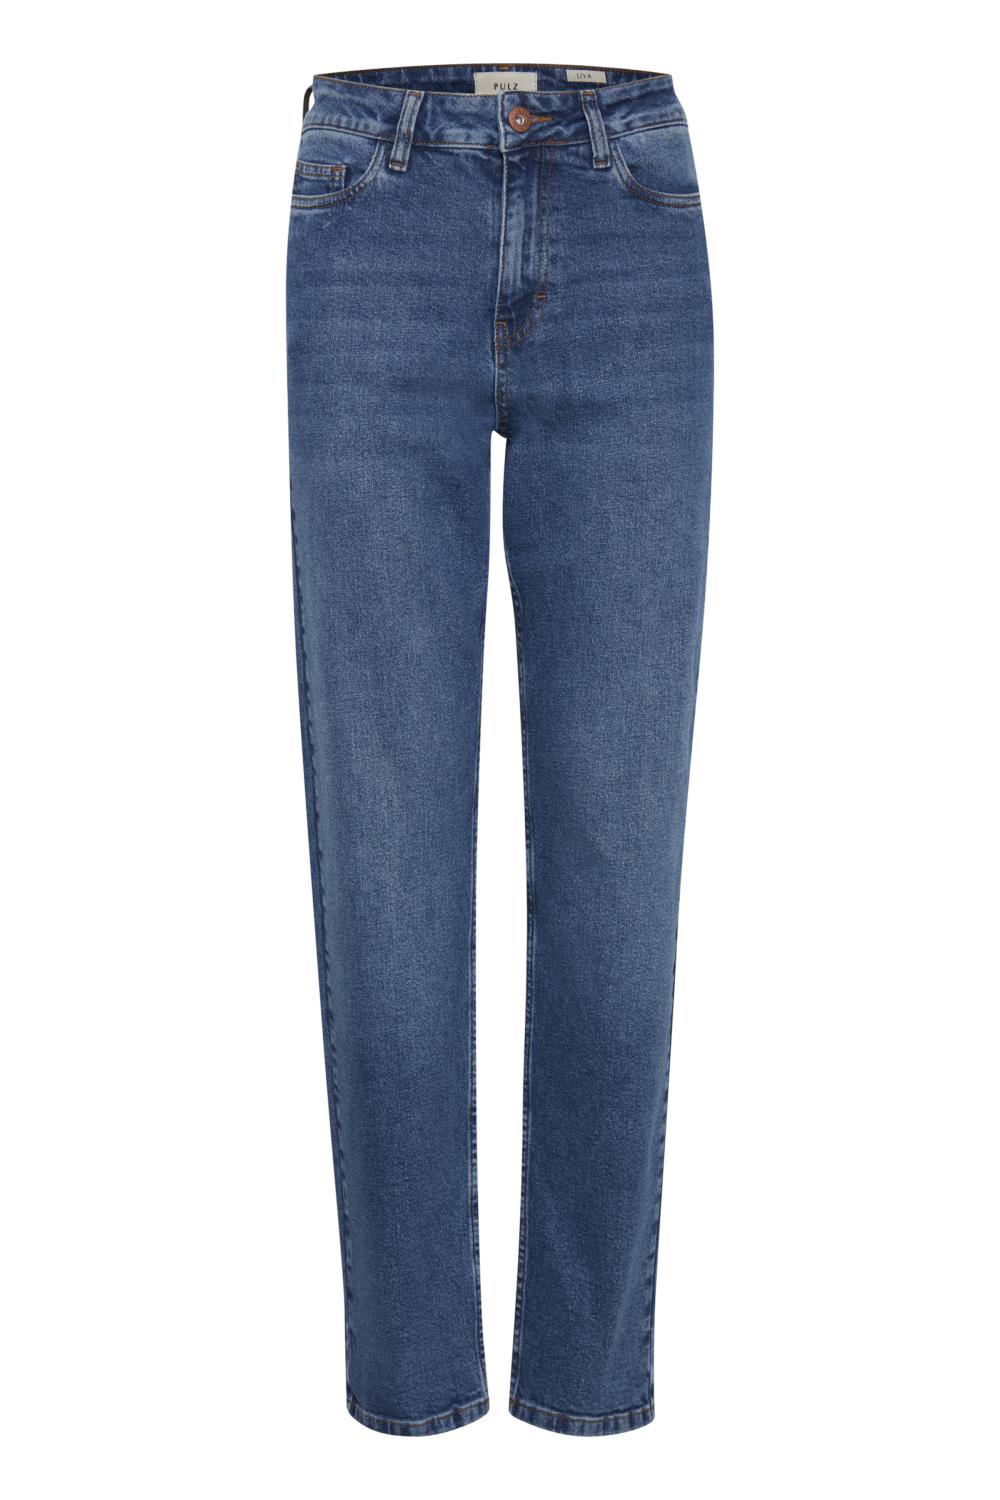 Pulz Liva jeans regular leg, denimblå